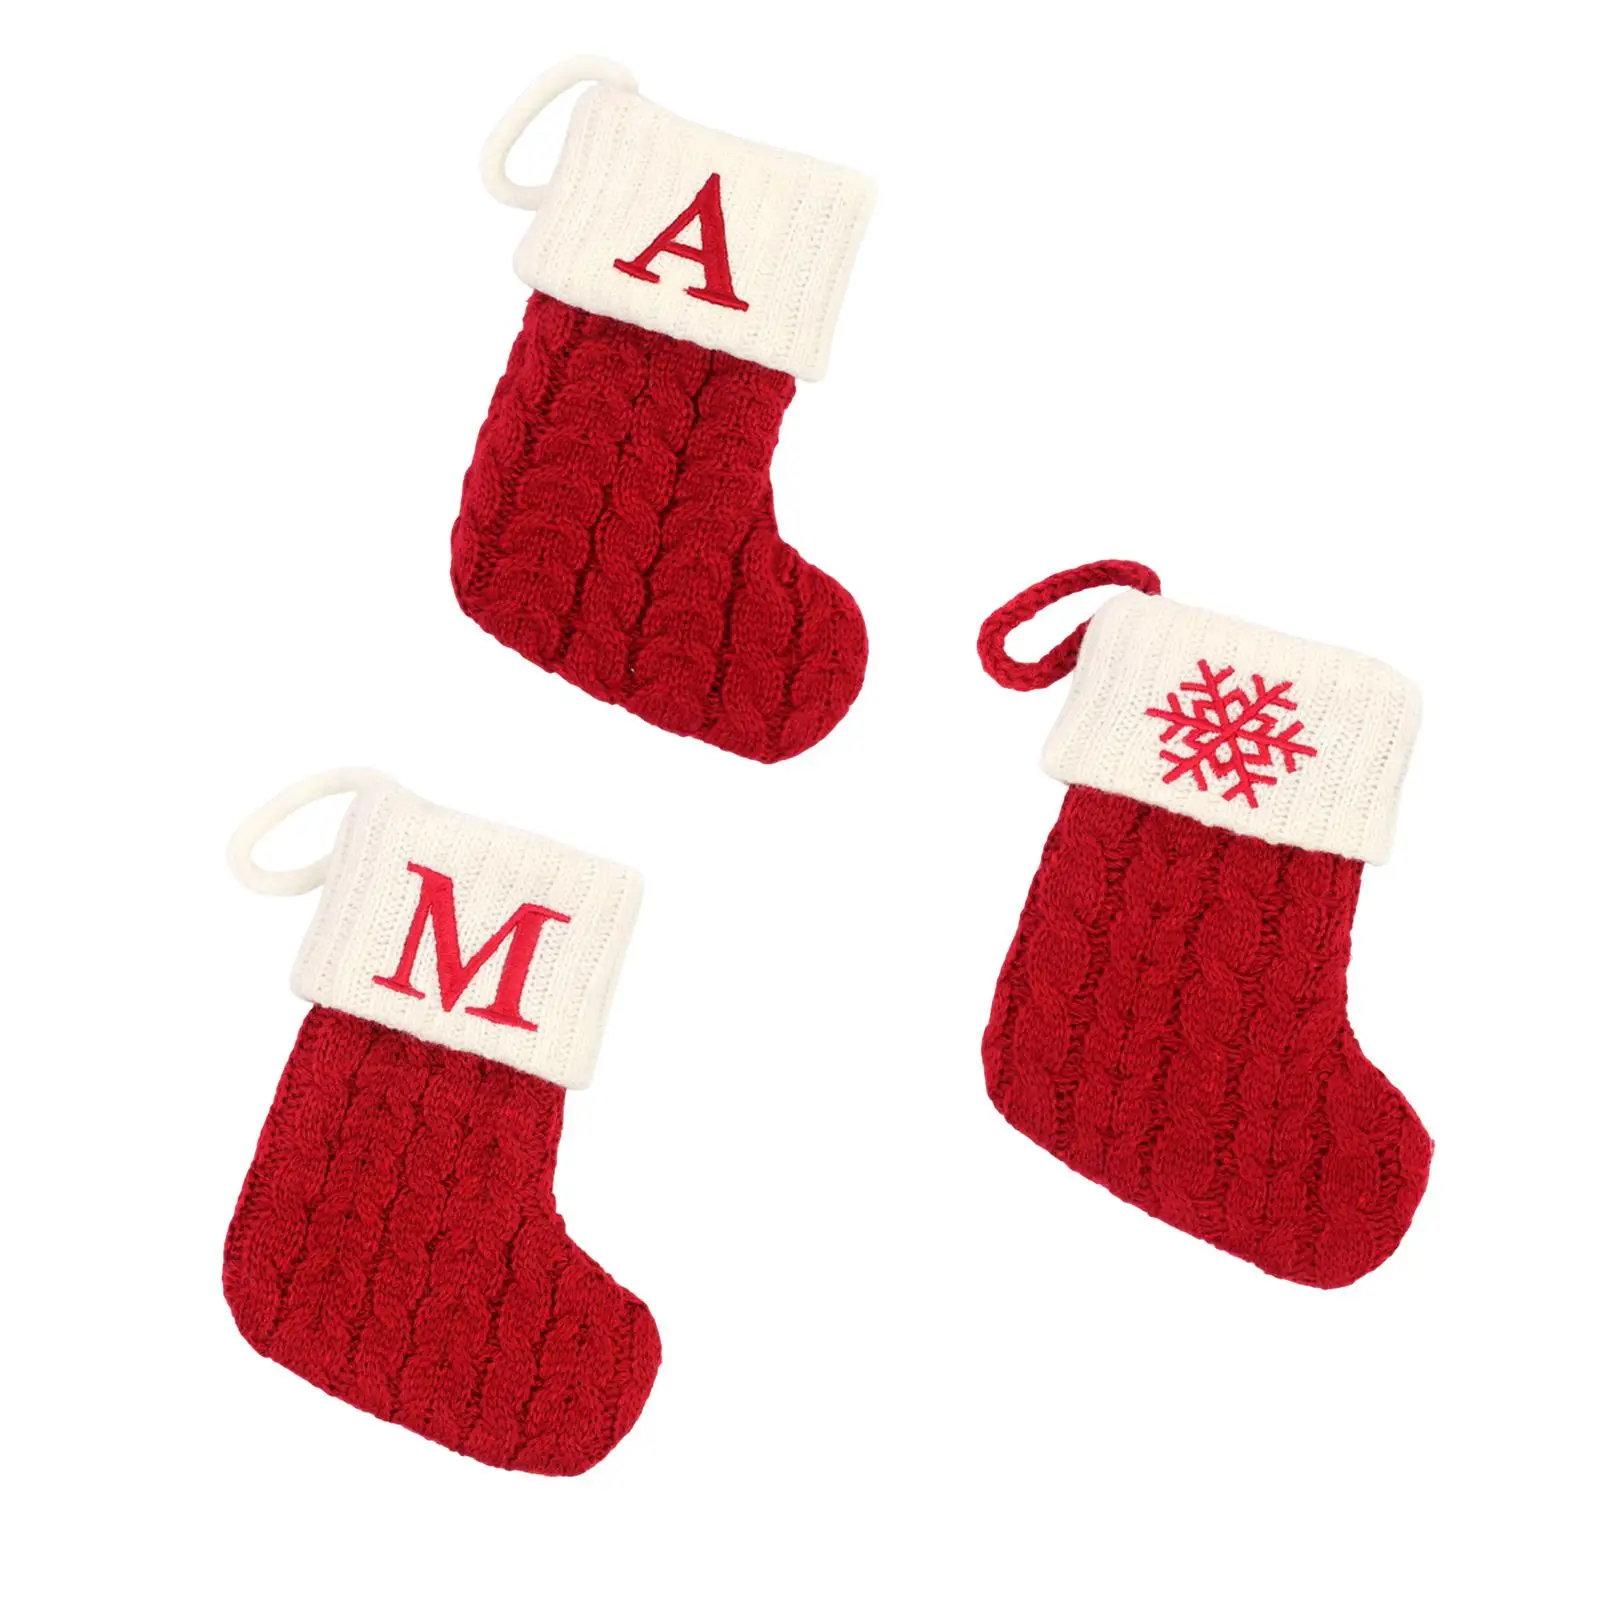 Hanging Knit Christmas Stocking Candy Gift Bag Crochet Cable Knit Christmas Stockings Christmas Socks for Garden Xmas Tree Decor